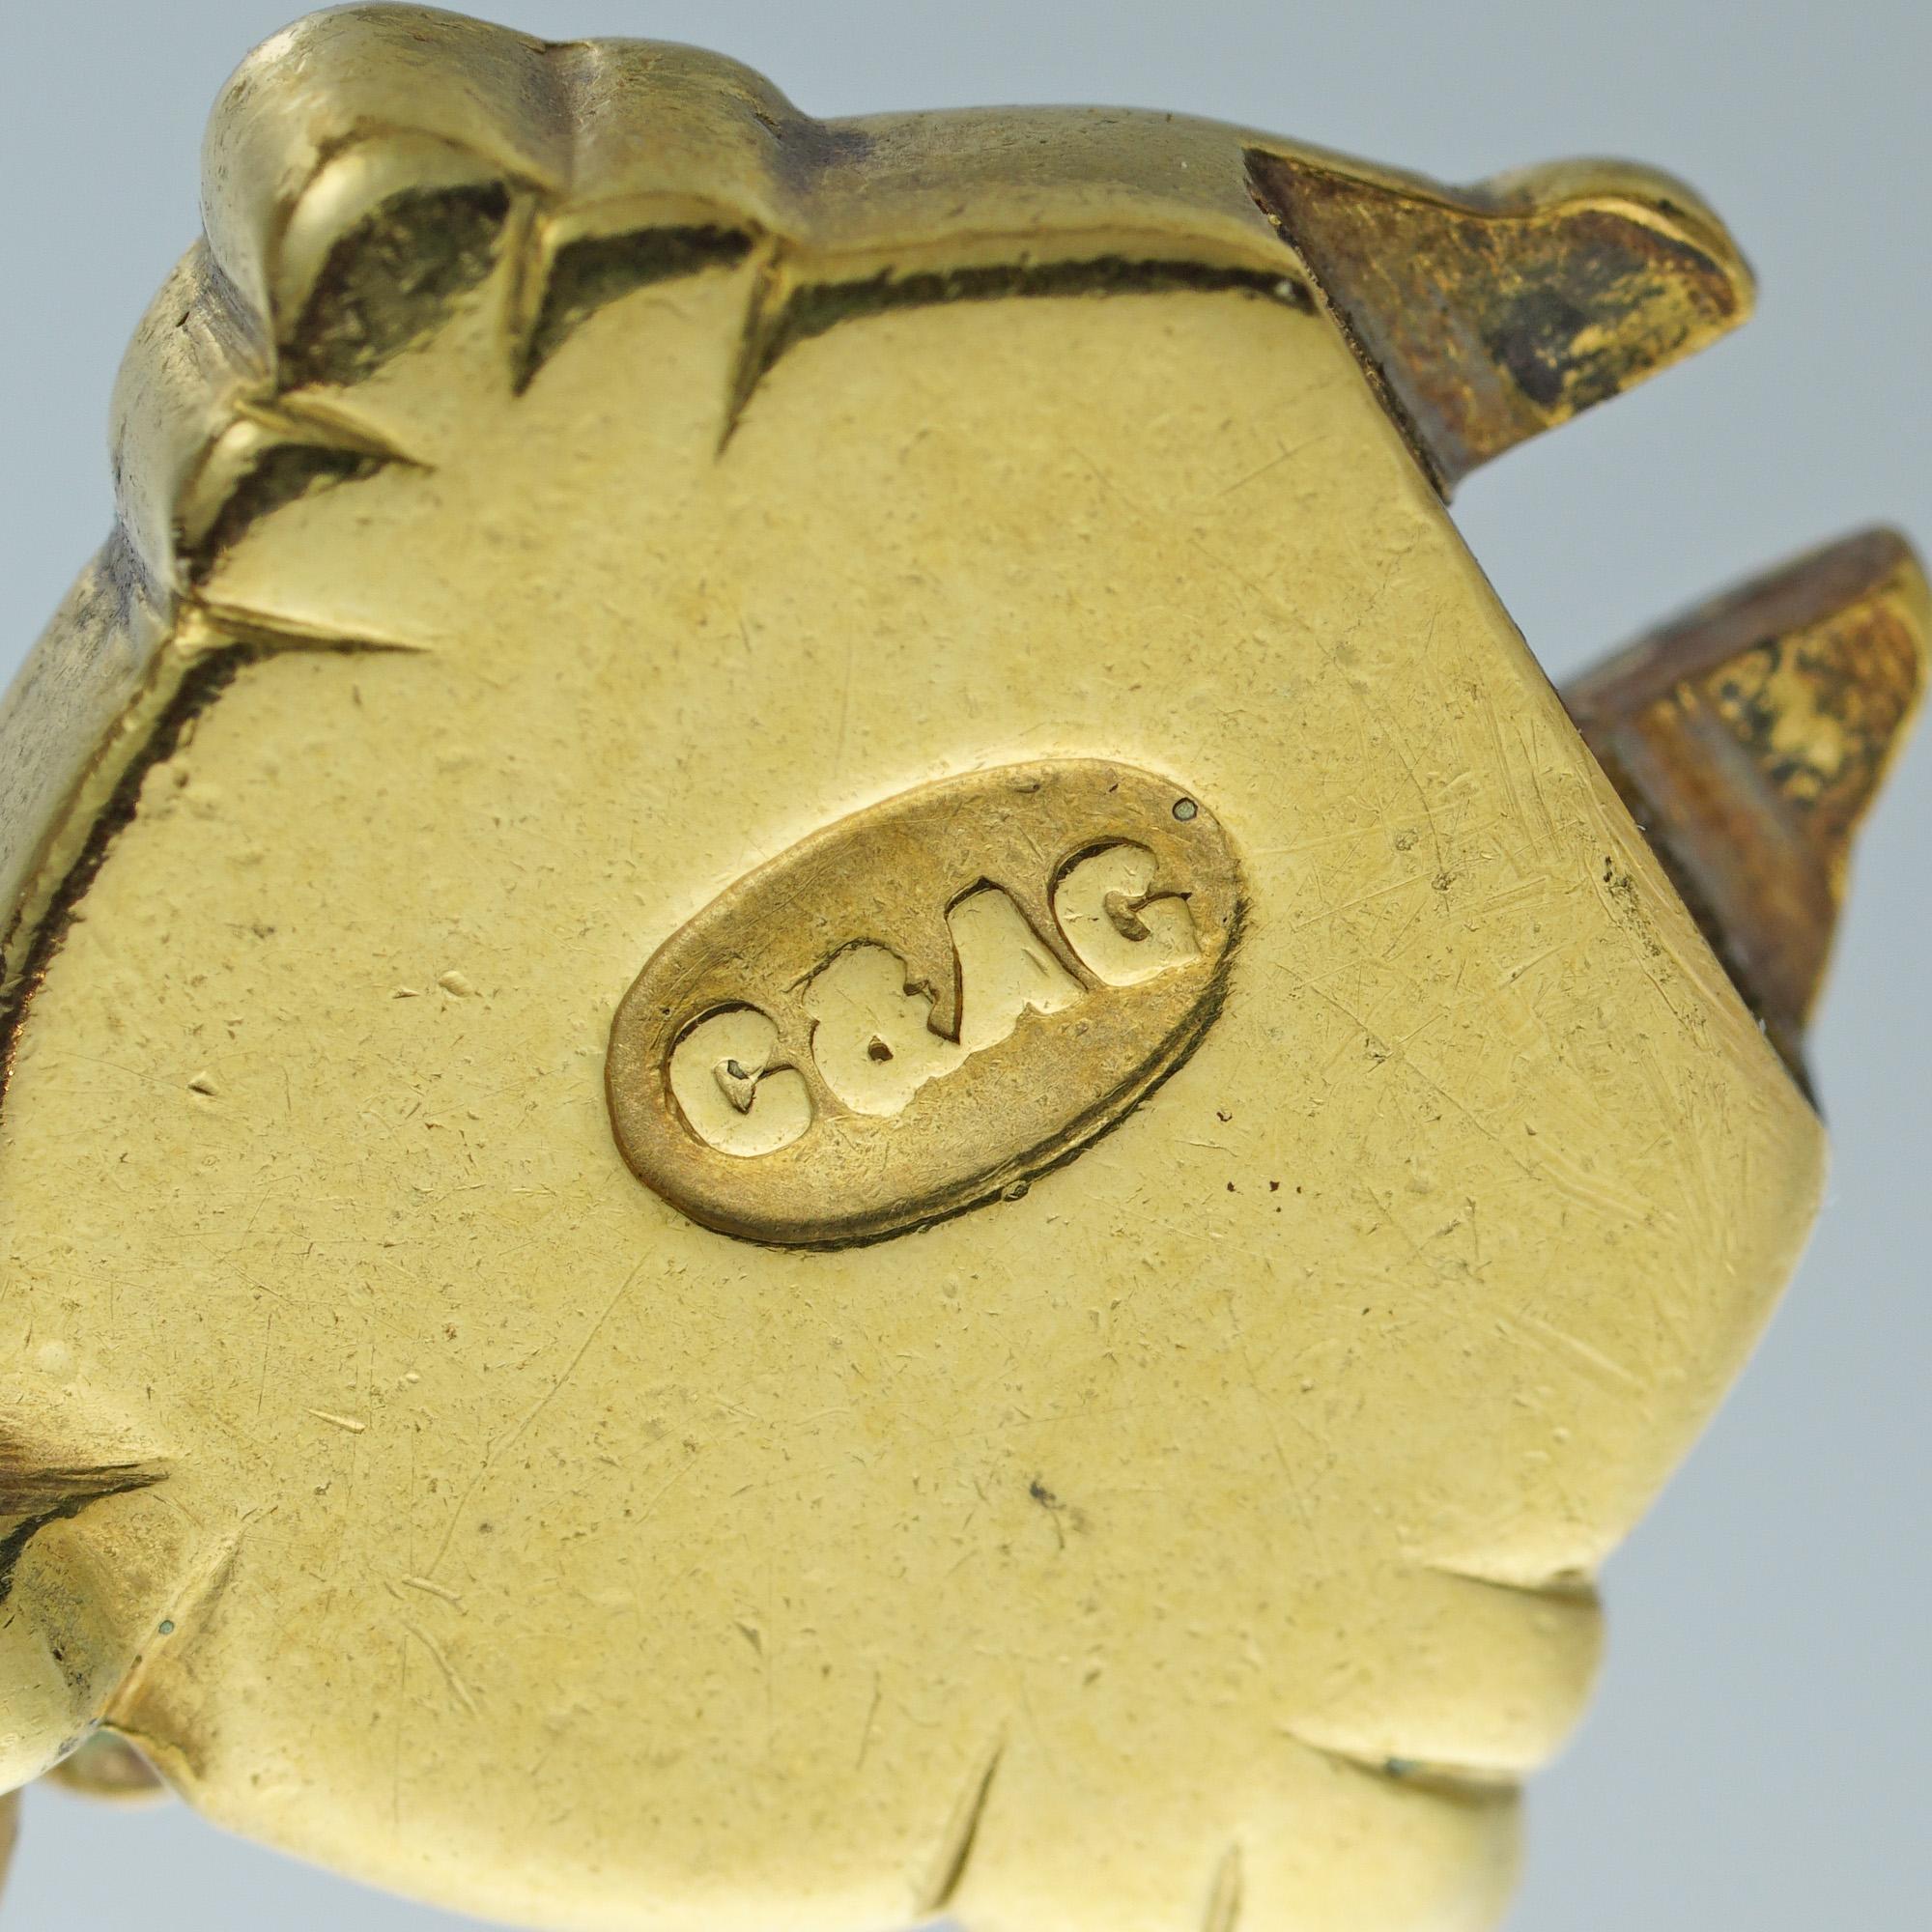 Renaissance Revival Gold and Enamel Gemset Bracelet by Giuliano